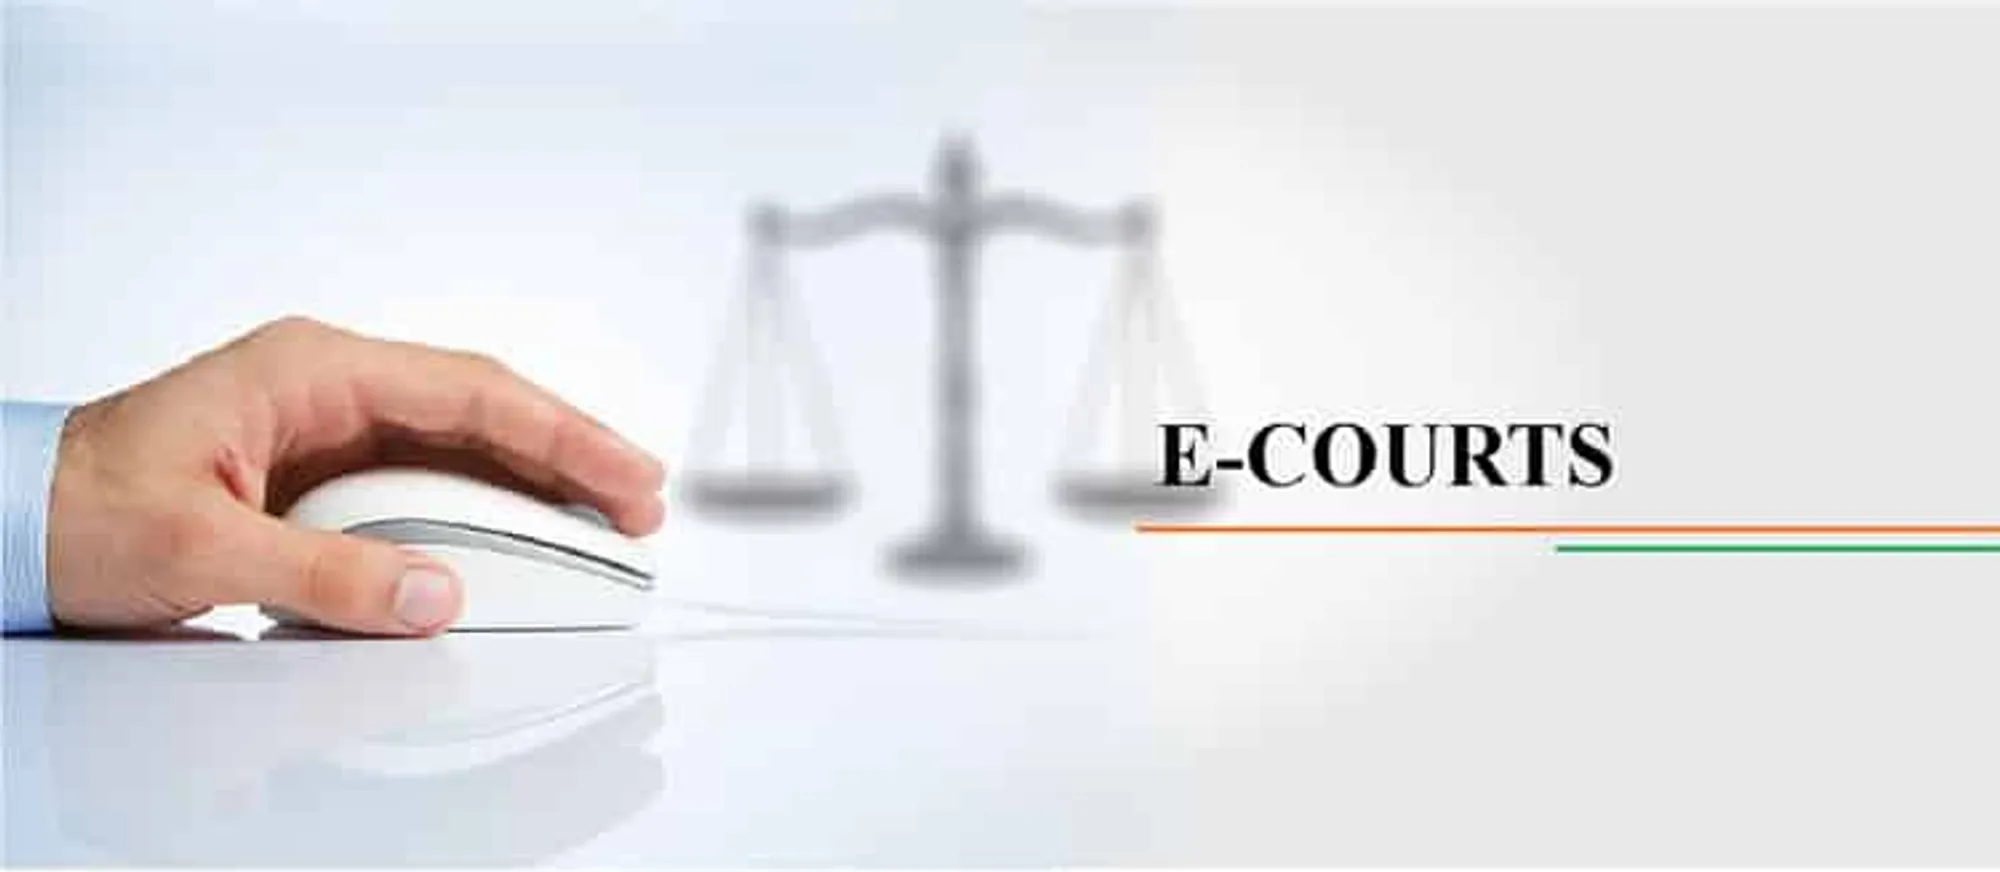 e-courts in India